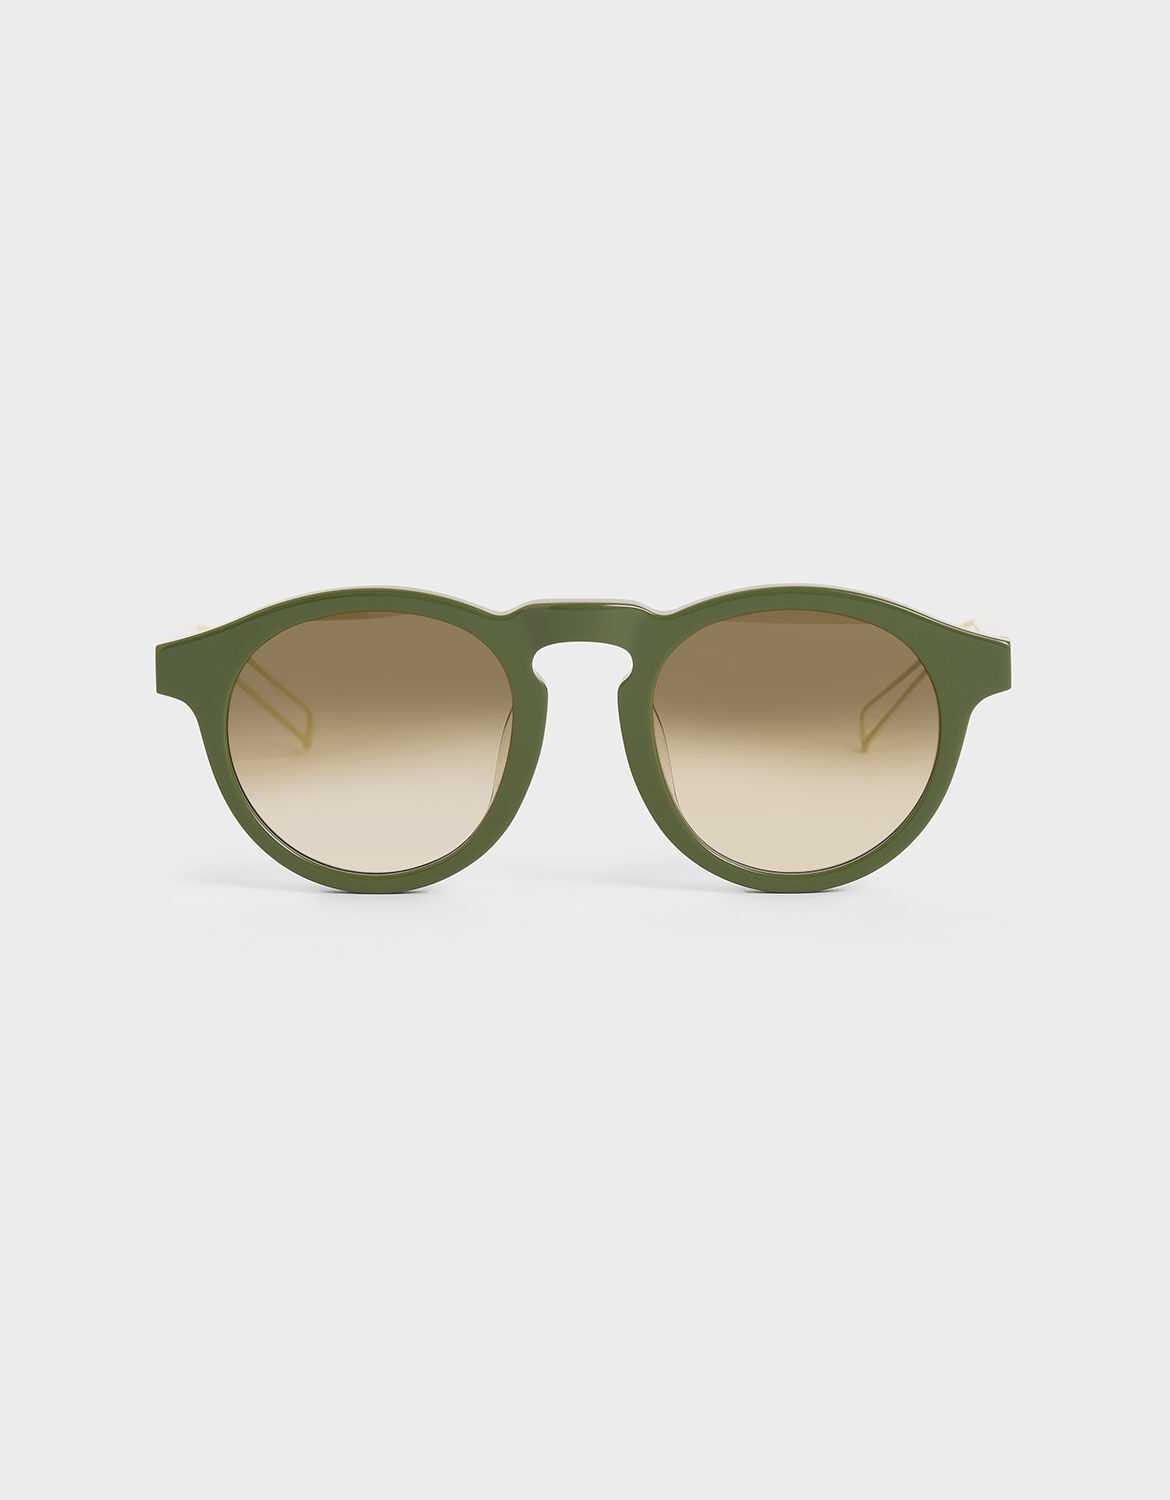 Green Sunglasses Flash Sales, 56% OFF | www.emanagreen.com